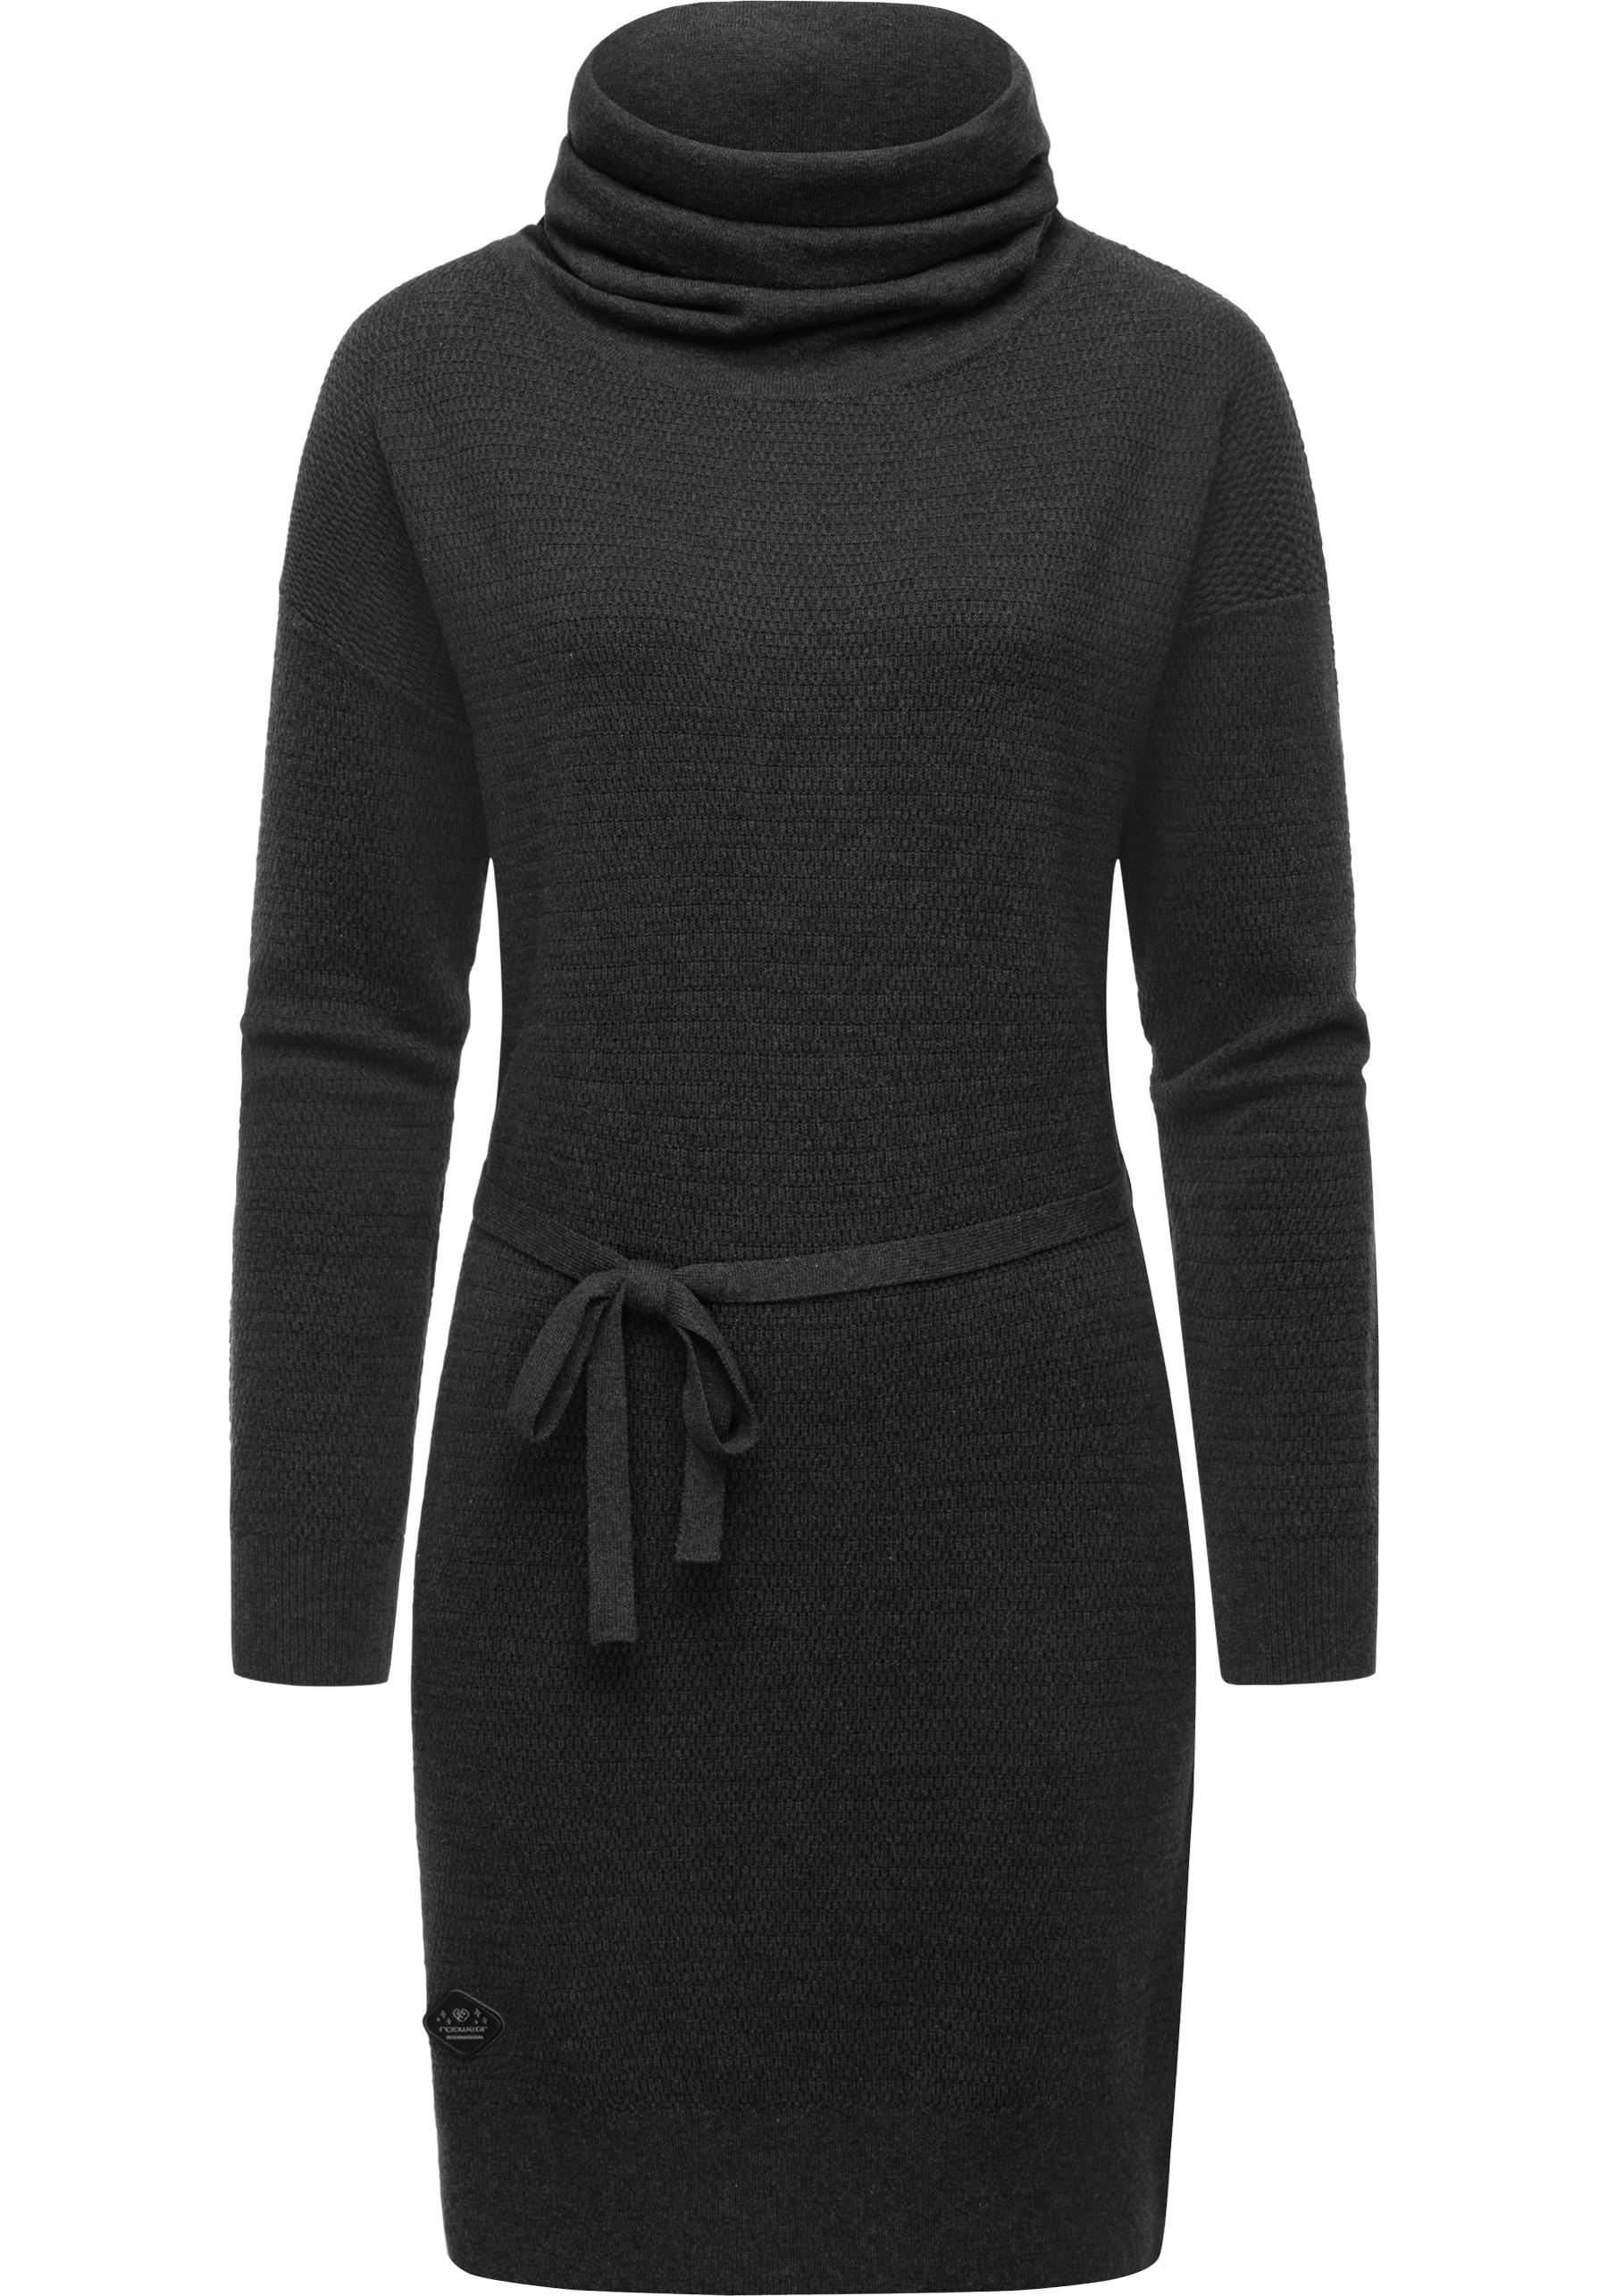 Ragwear Sweatkleid »Babett Dress Intl.«, warmes Winterkleid mit breitem Rollkragen